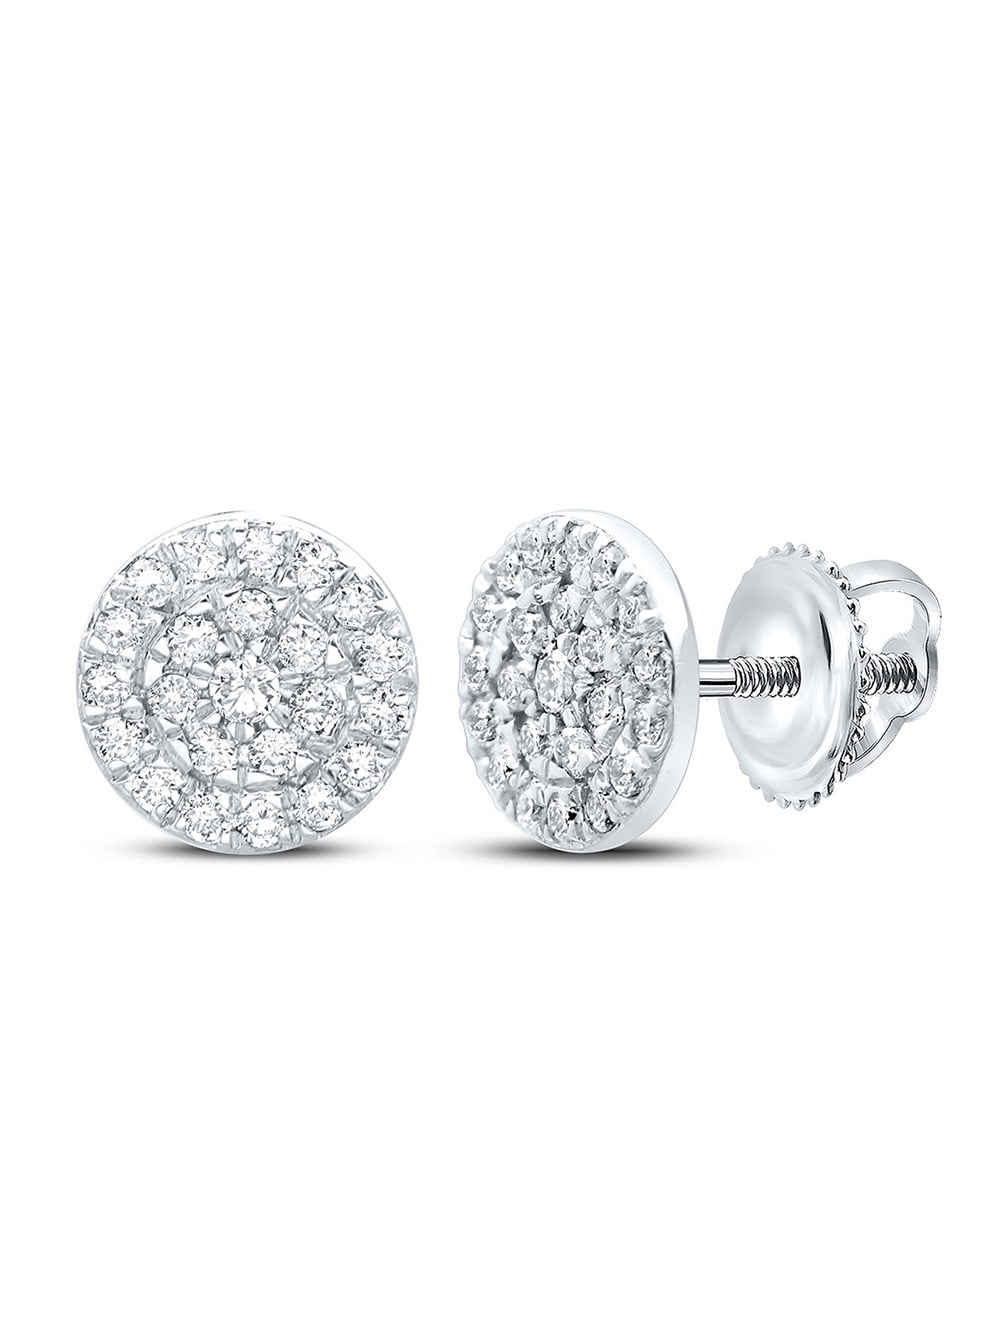 ARAIYA FINE JEWELRY 10kt White Gold Womens Round Diamond Cluster Earrings 1/8 Cttw